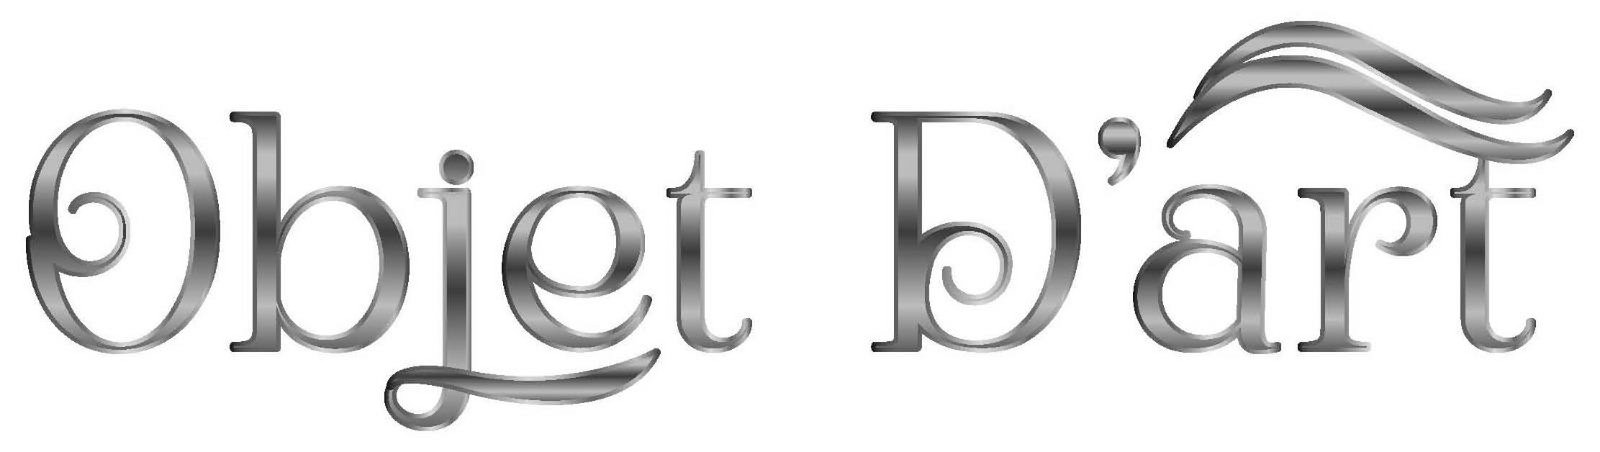 Trademark Logo OBJET D'ART